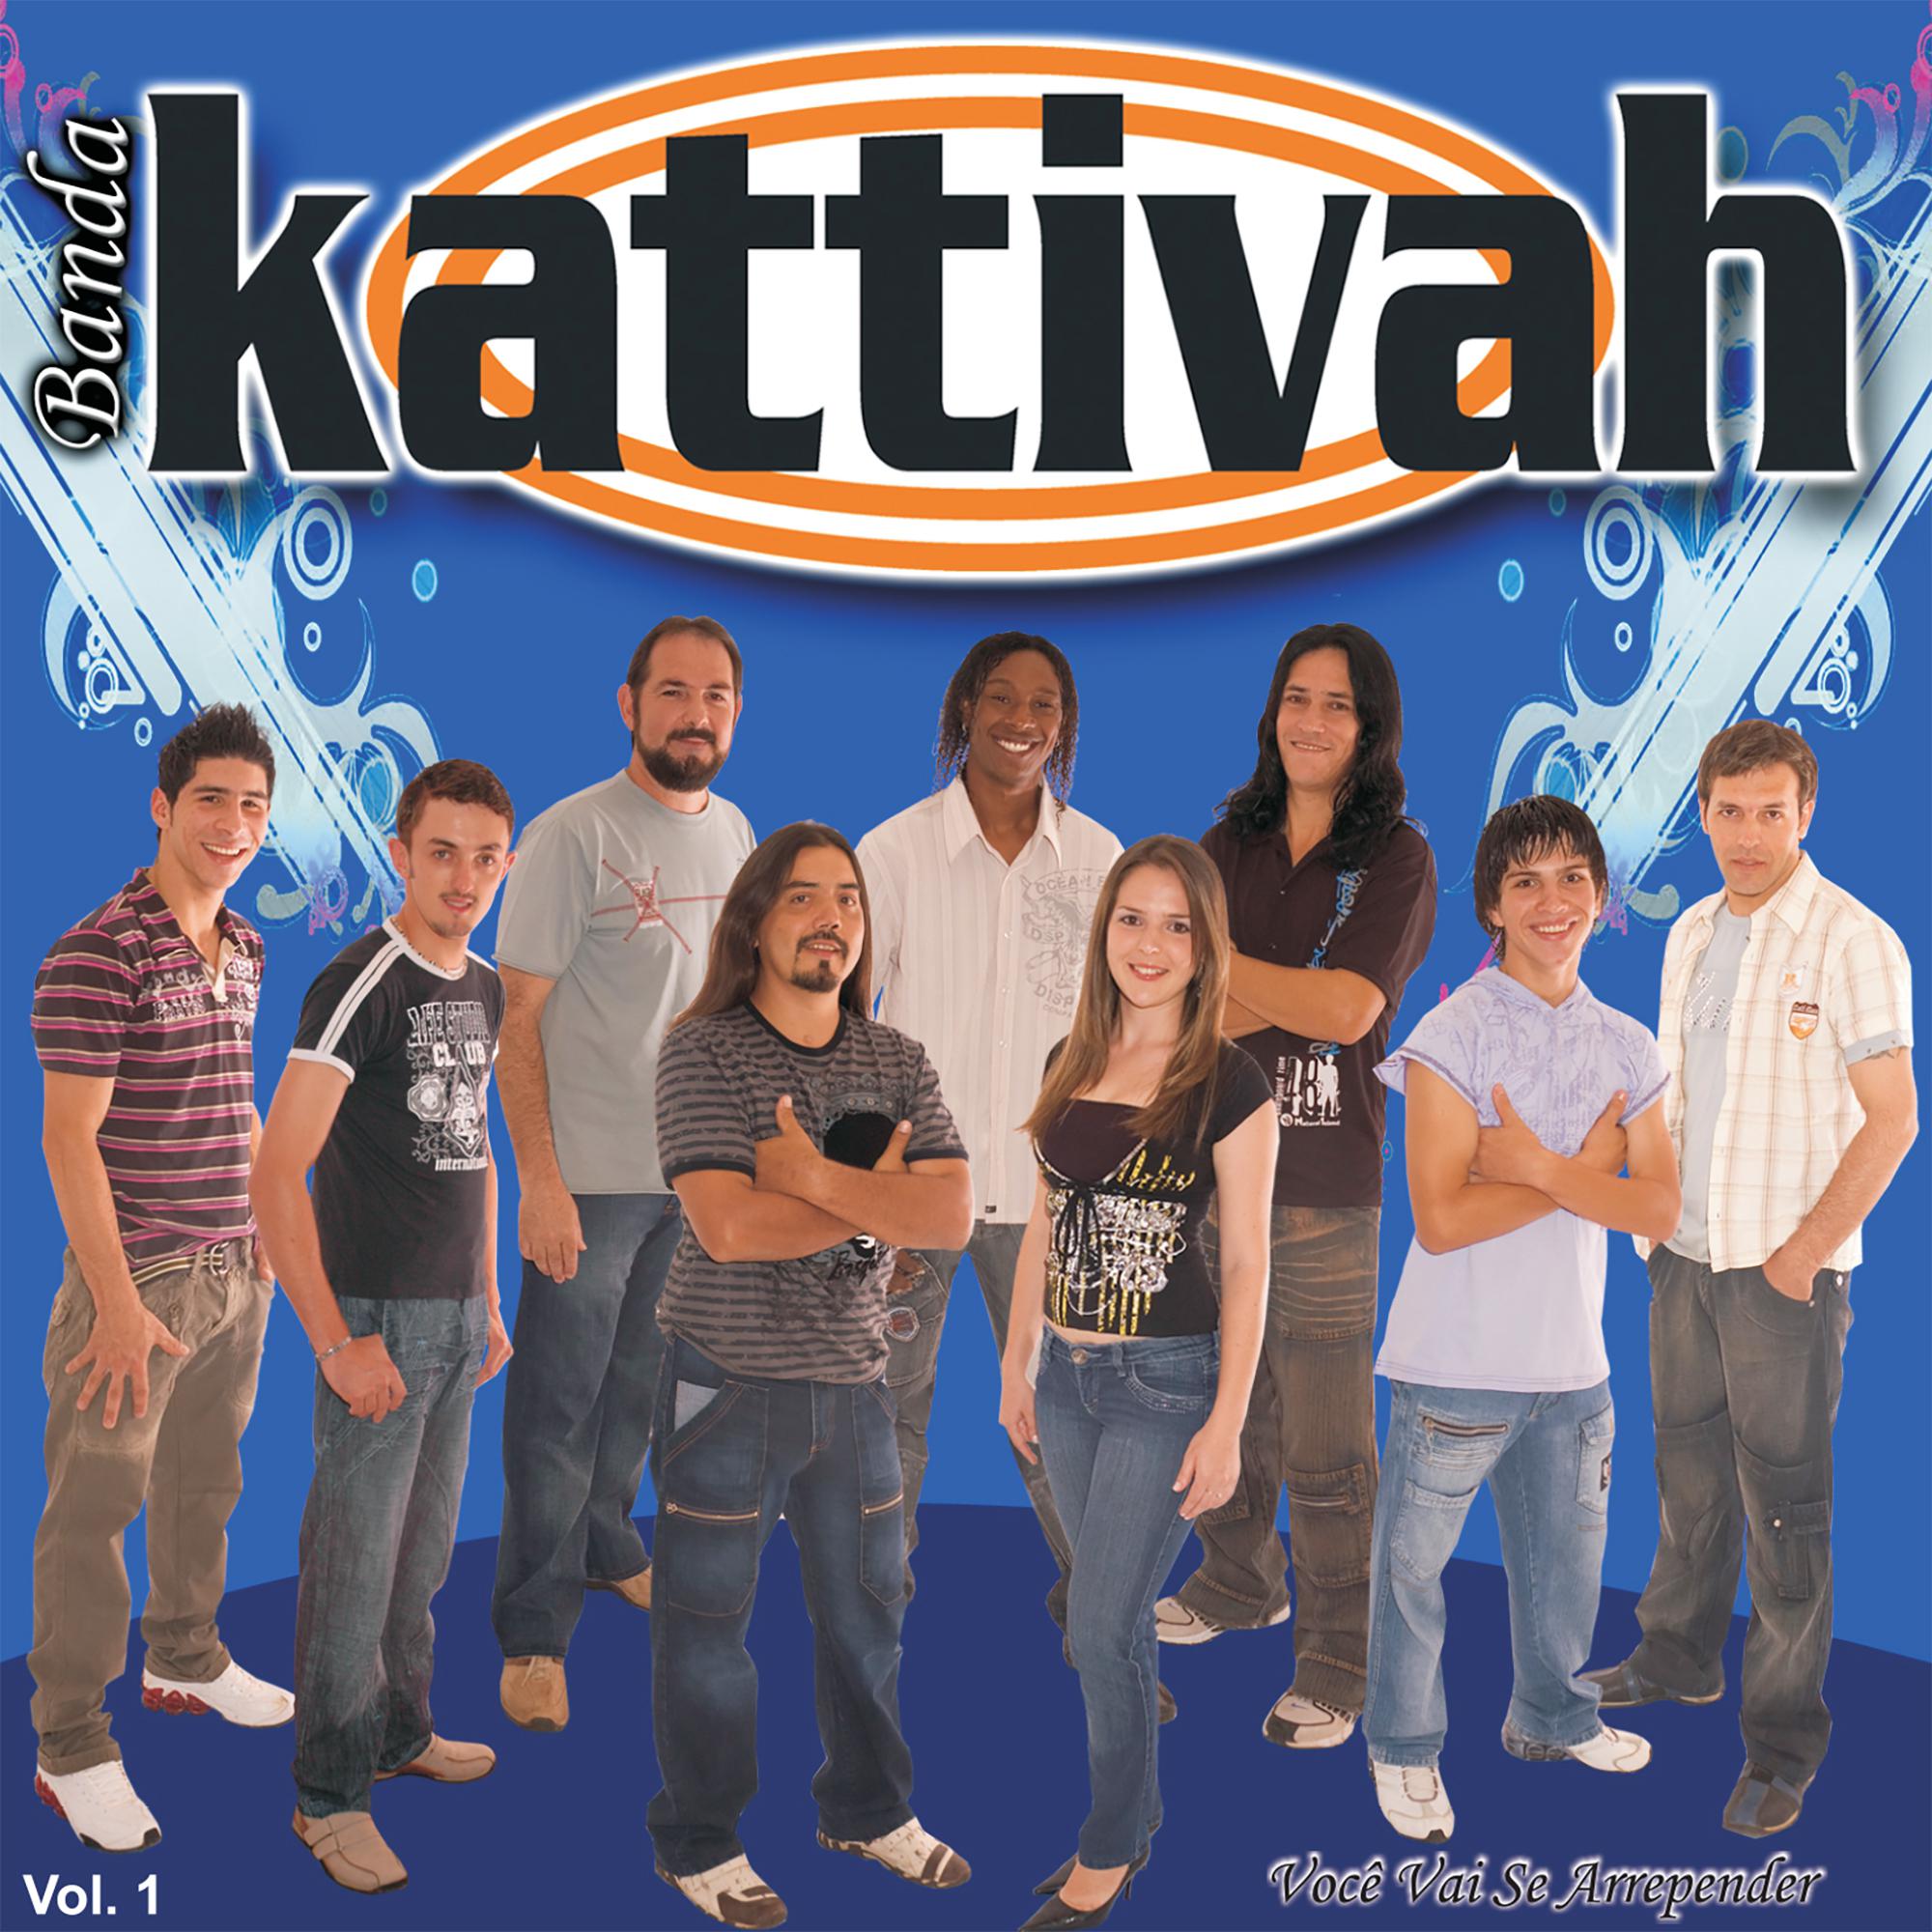 Banda Kattivah